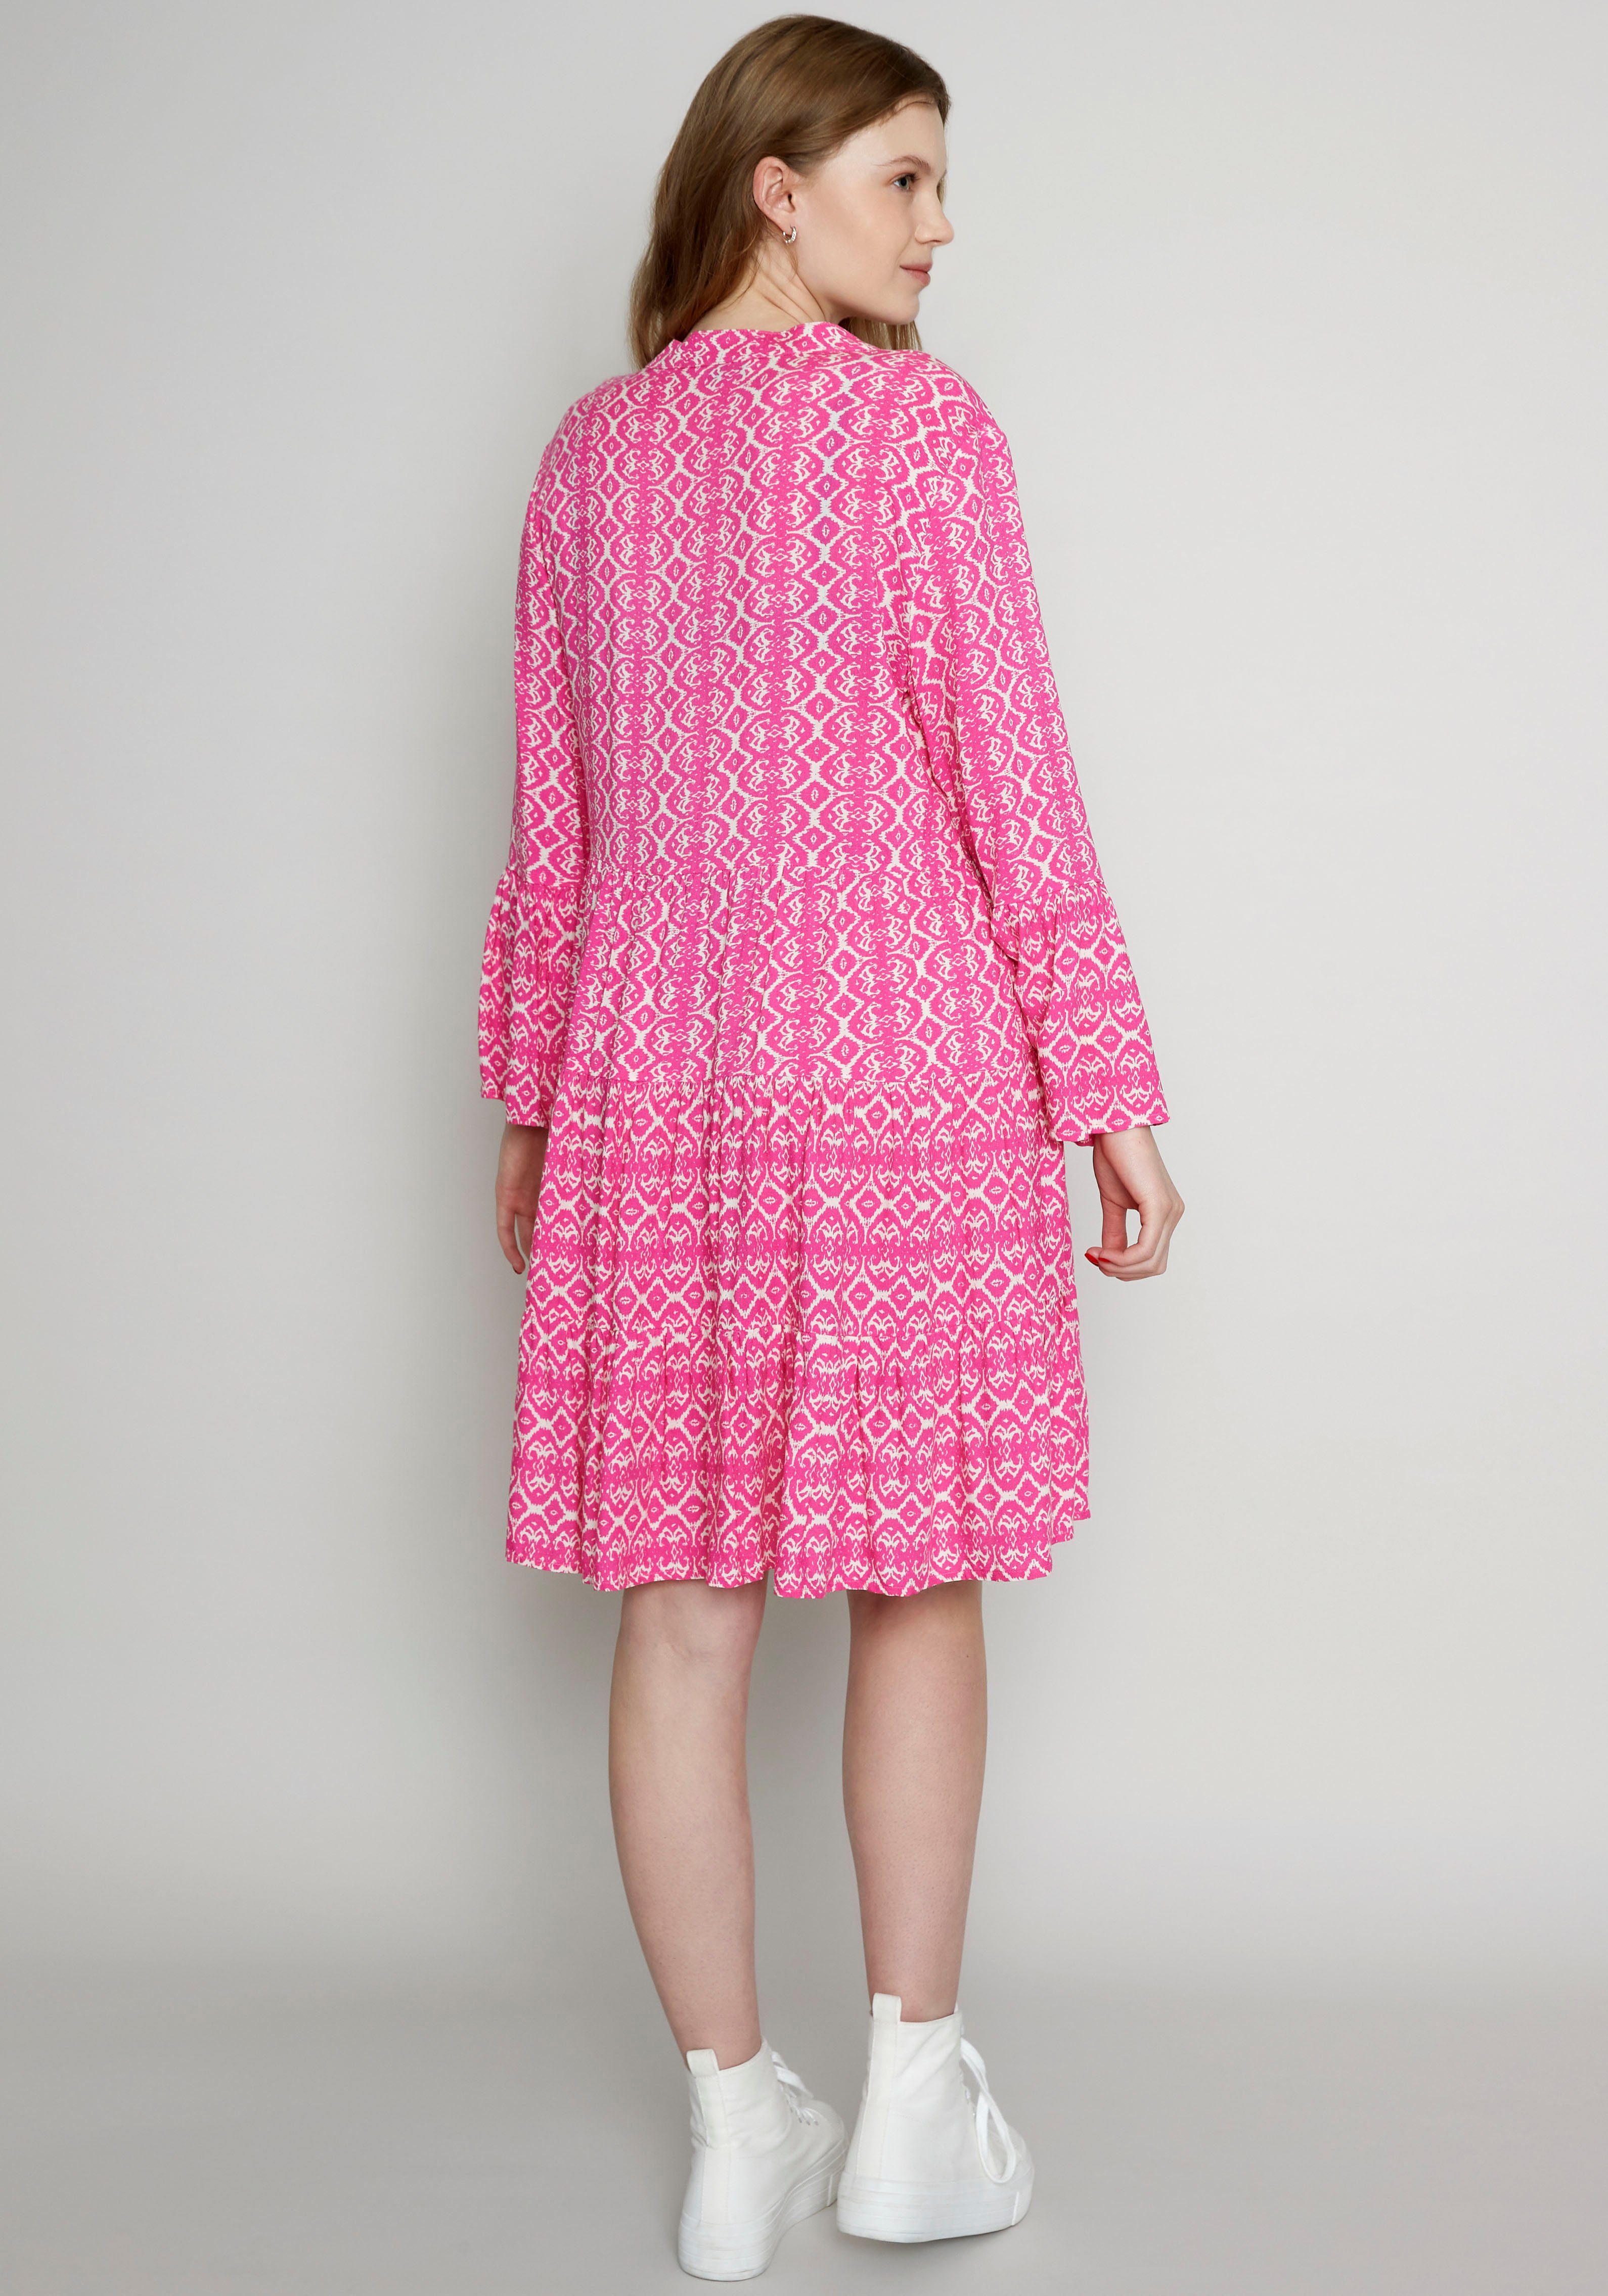 ZABAIONE Sommerkleid Dress Me44lika Tunika Volant mit im Style Pink